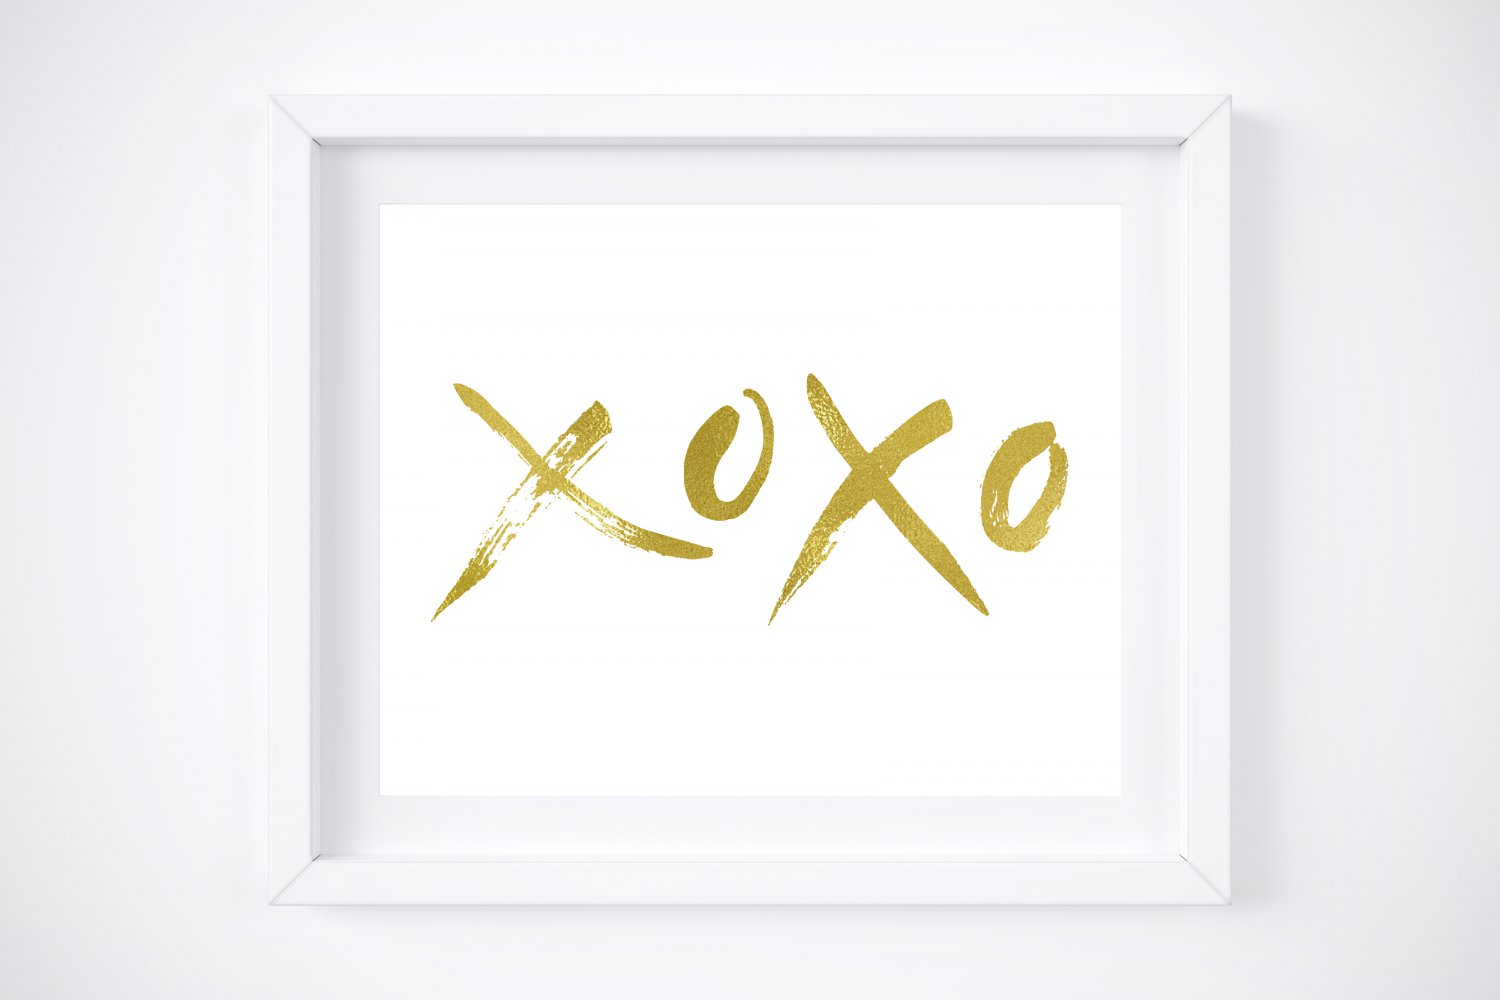 XOXO Foil Art Prints: 10" x 8" (Gold, Silver, Copper, Rose Gold & Black)